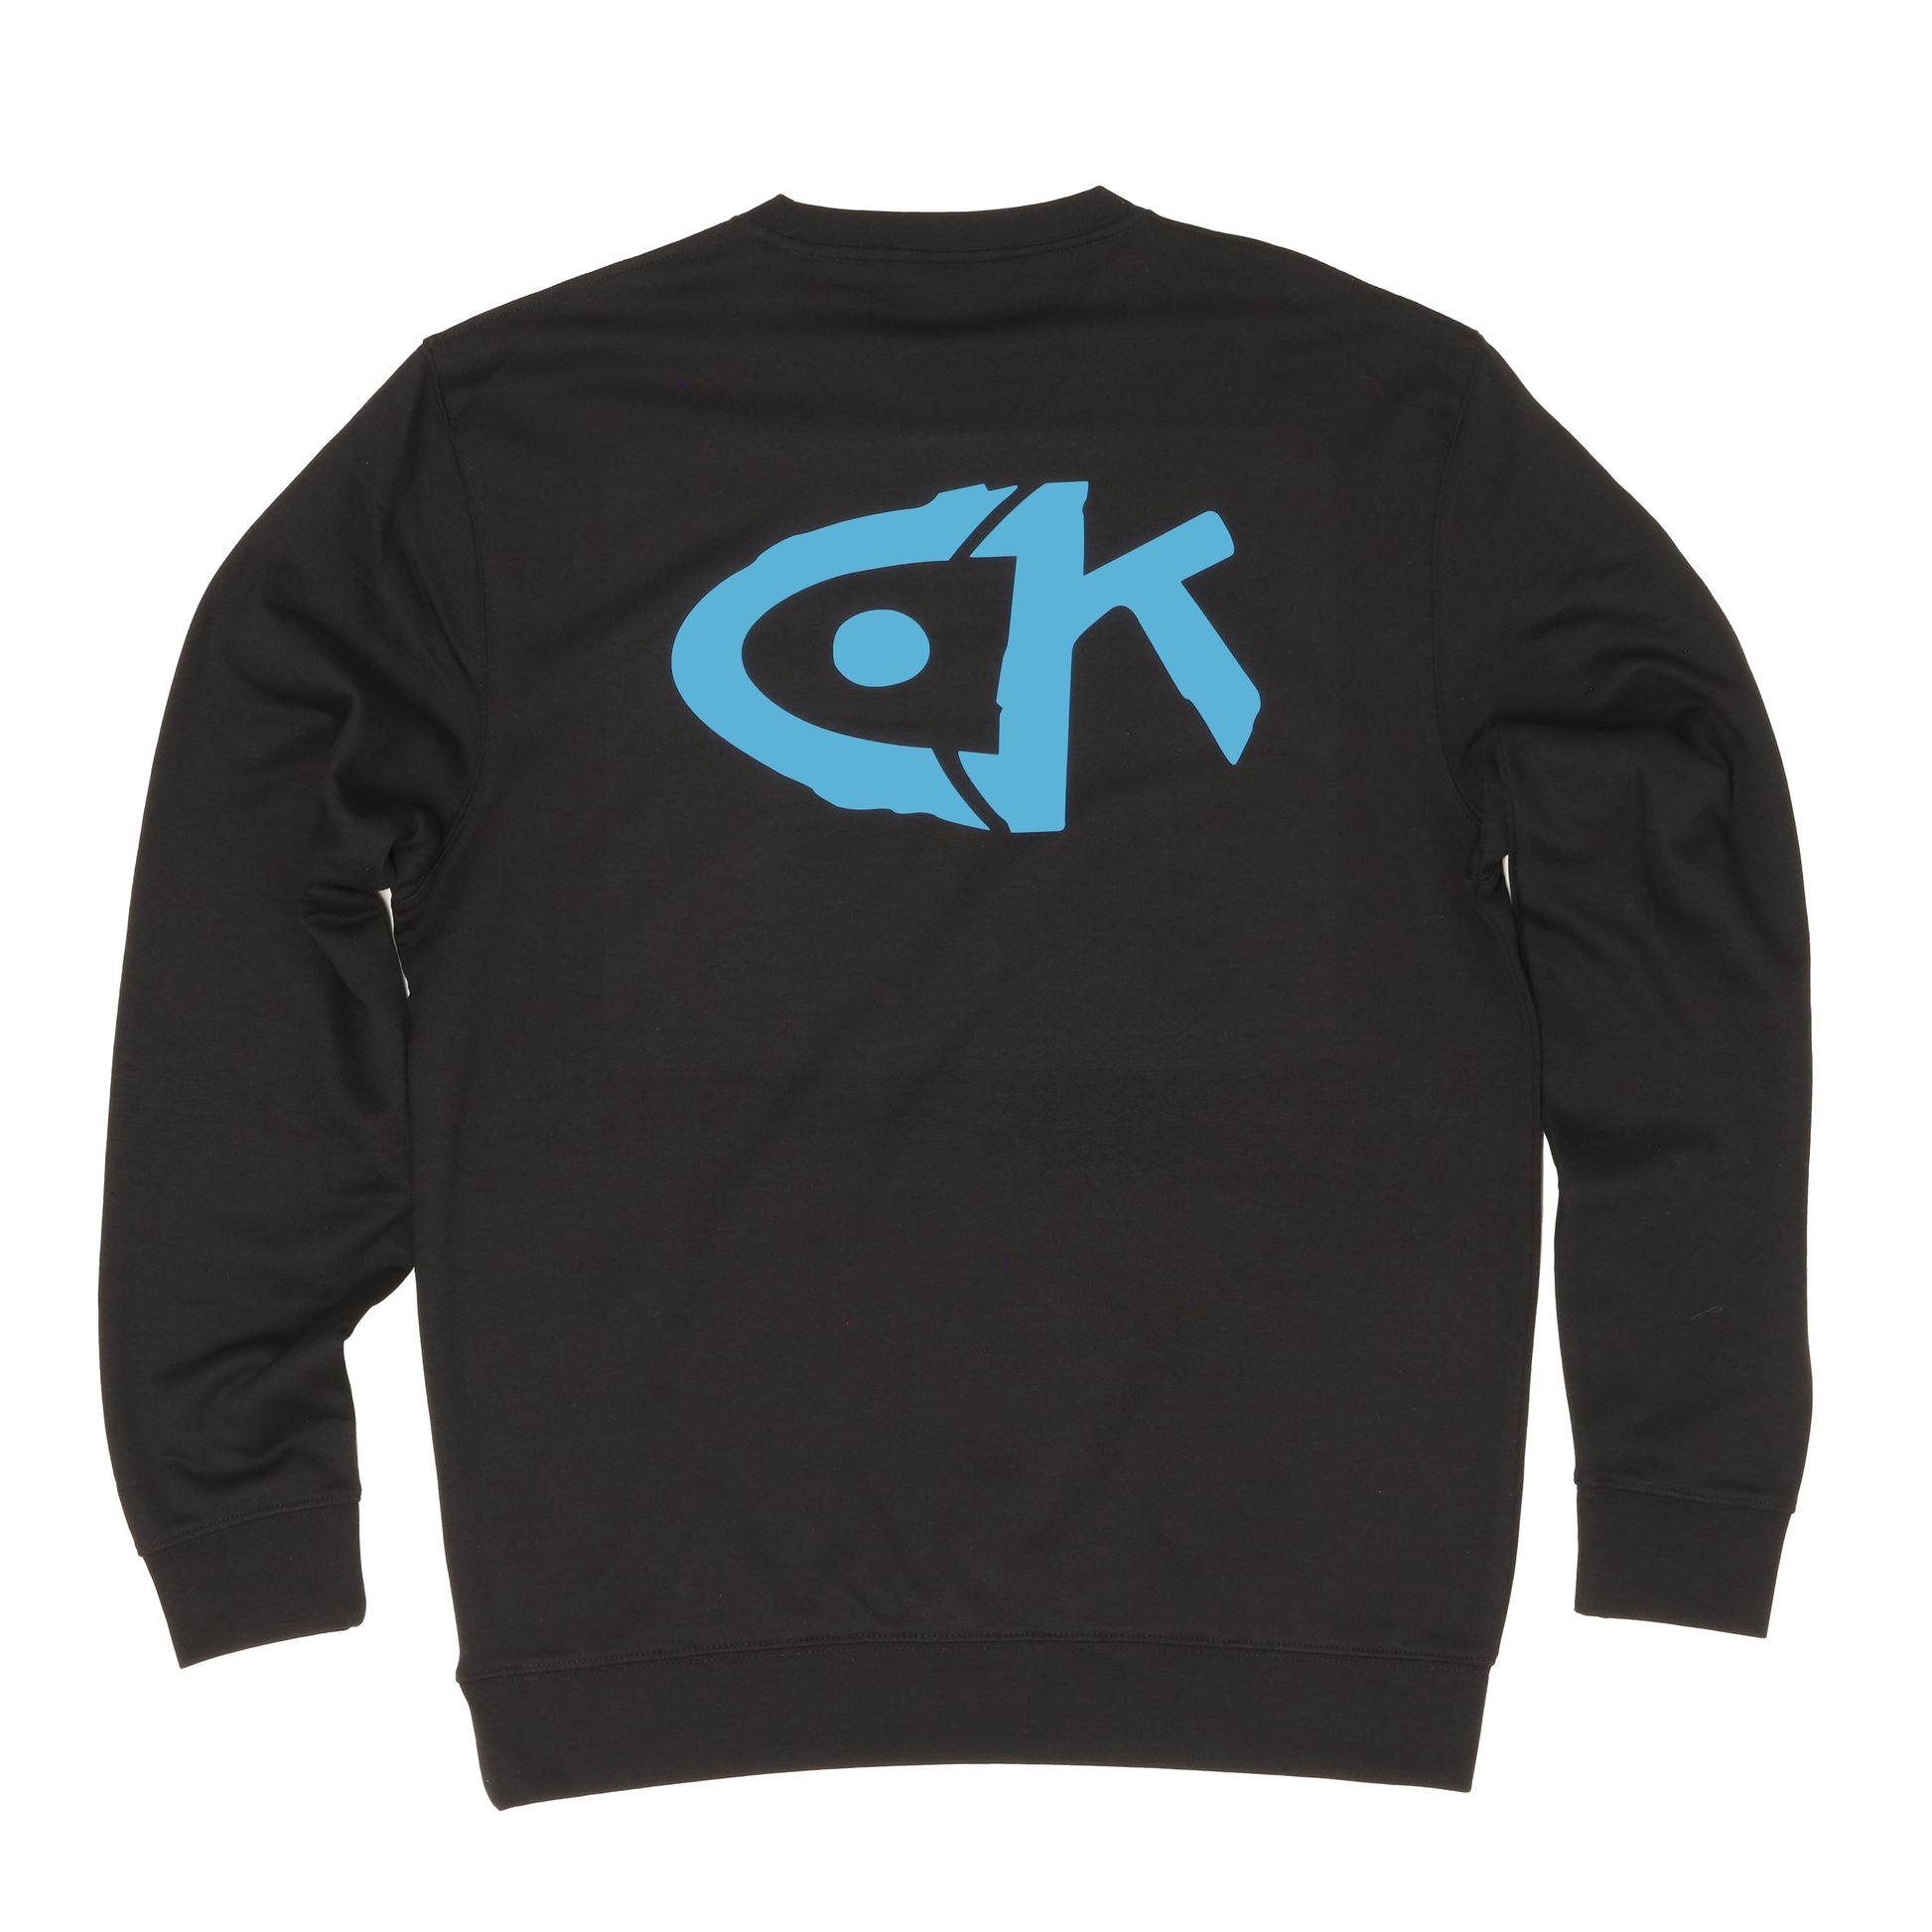 Conwy Kayak - Black Crewneck Sweater - 3